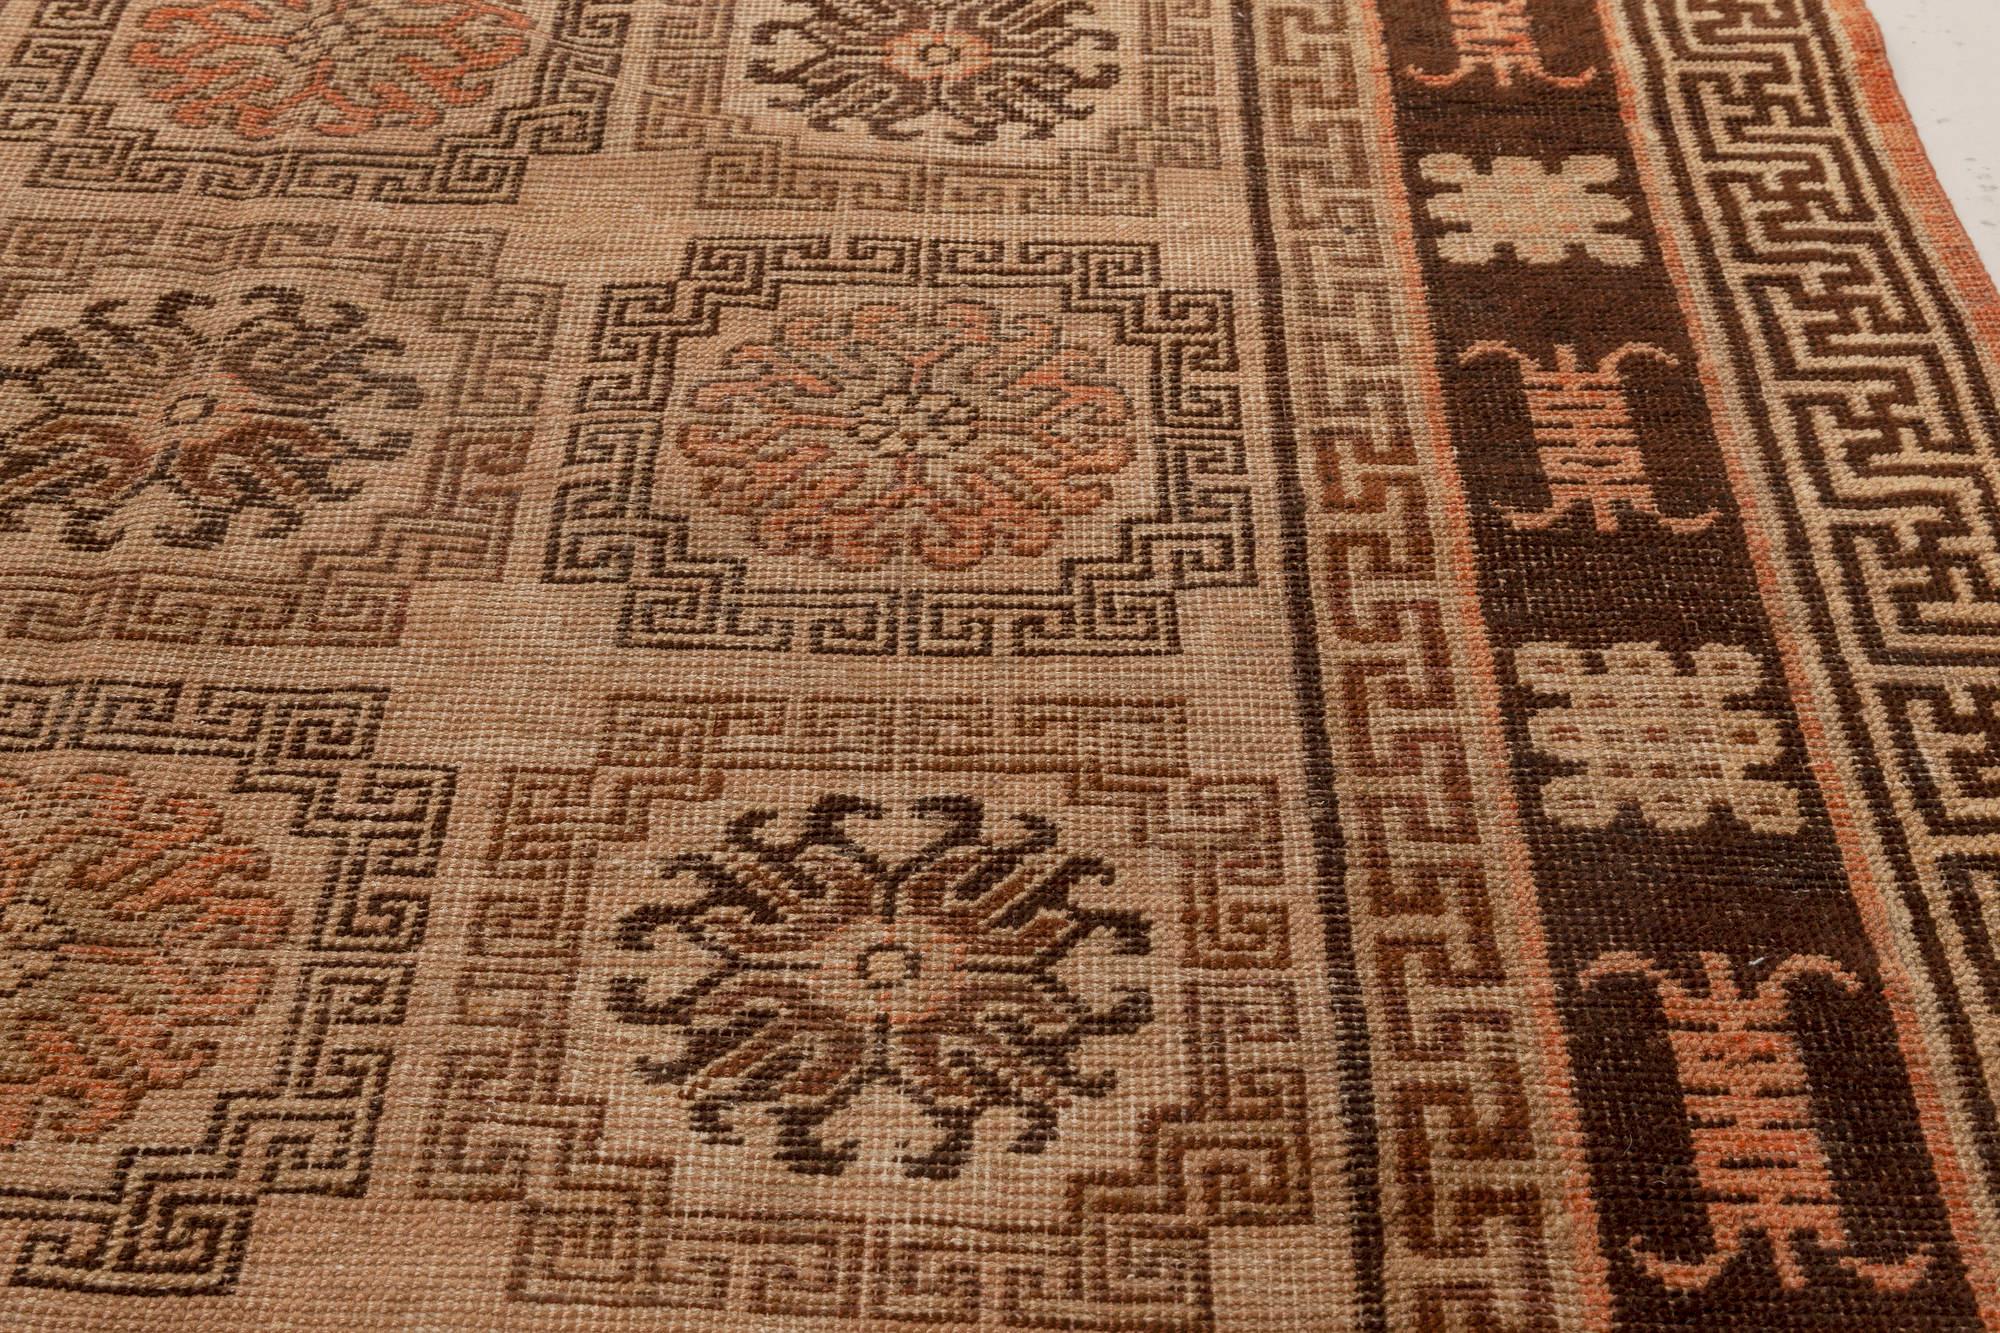 Mid-20th century Samarkand beige, brown and orange handmade wool rug.
Size: 4'6